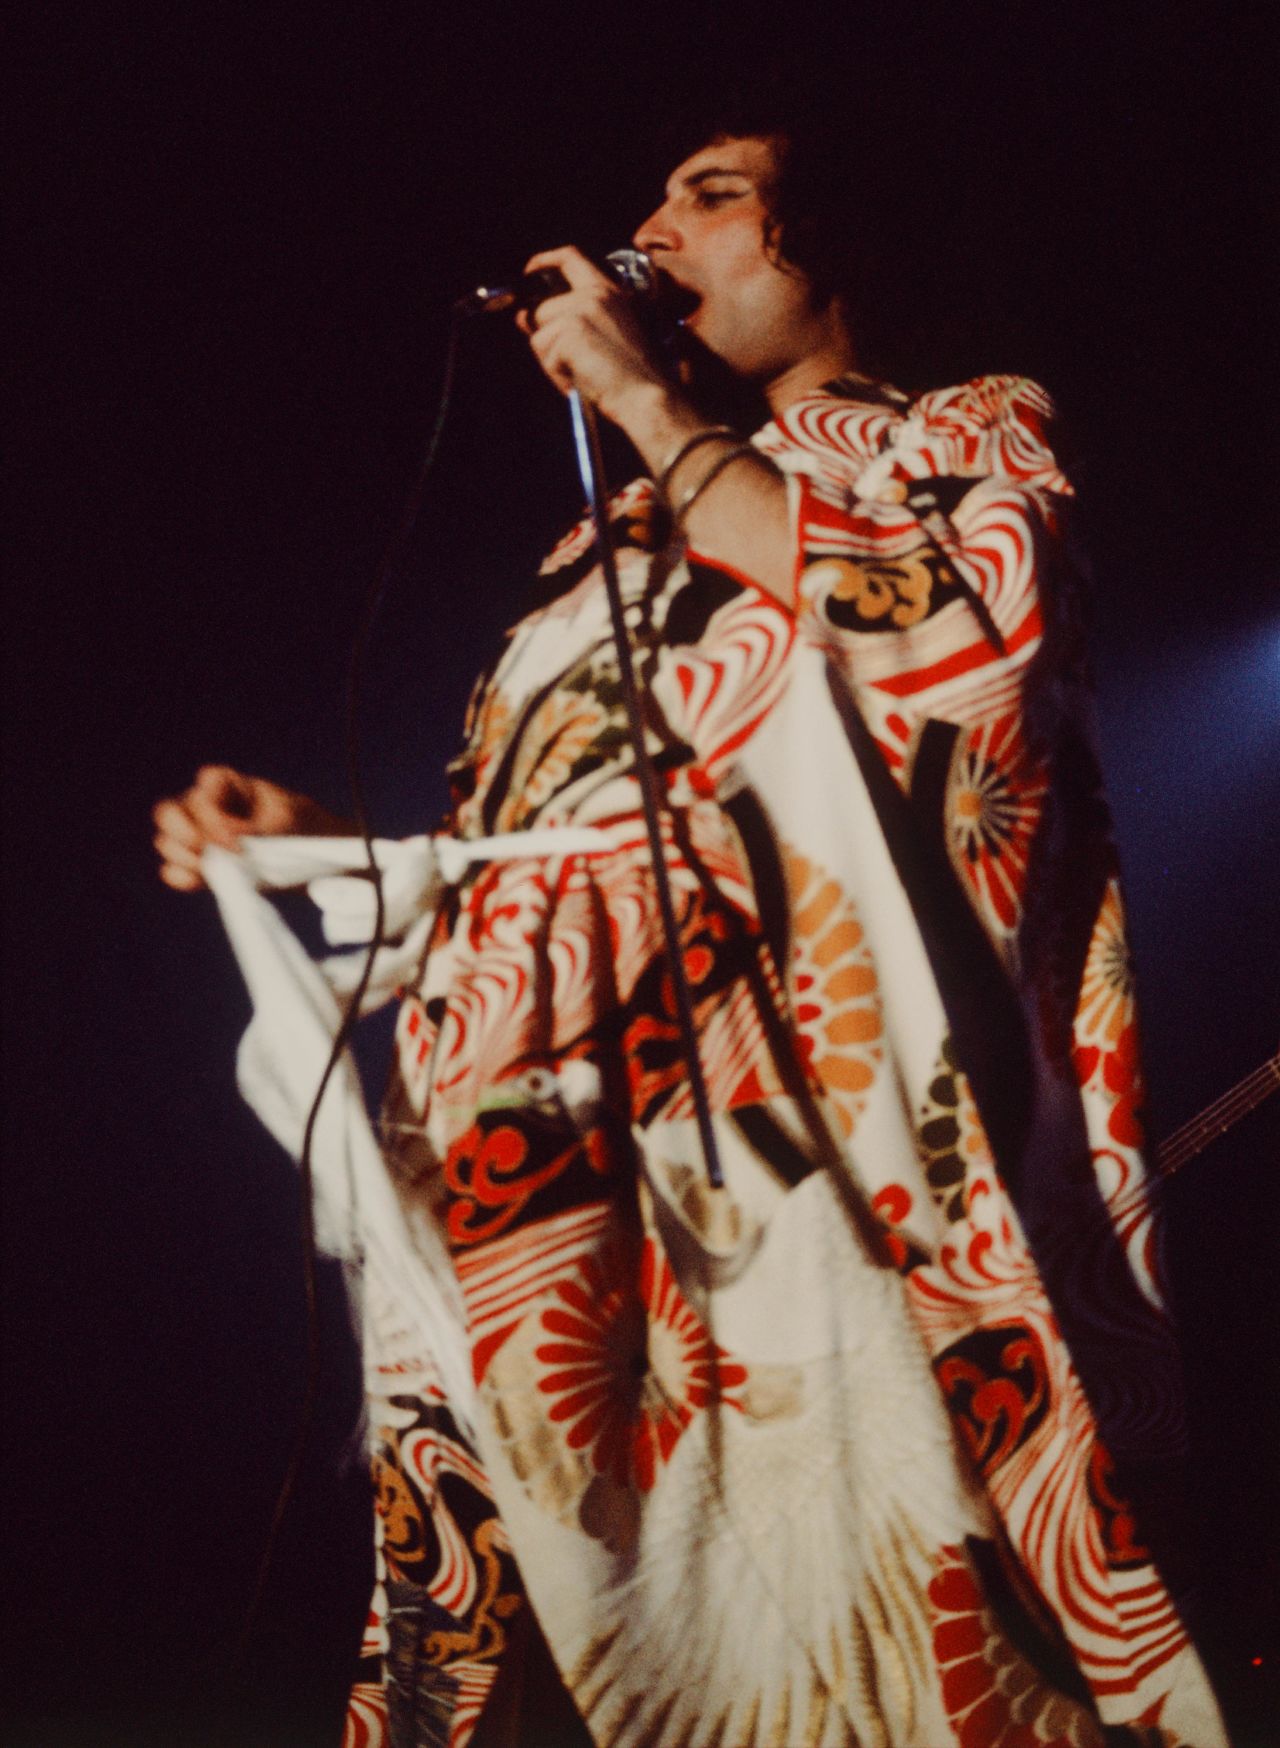 Queen frontman Freddie Mercury performs in a kimono in Tokyo in 1976.